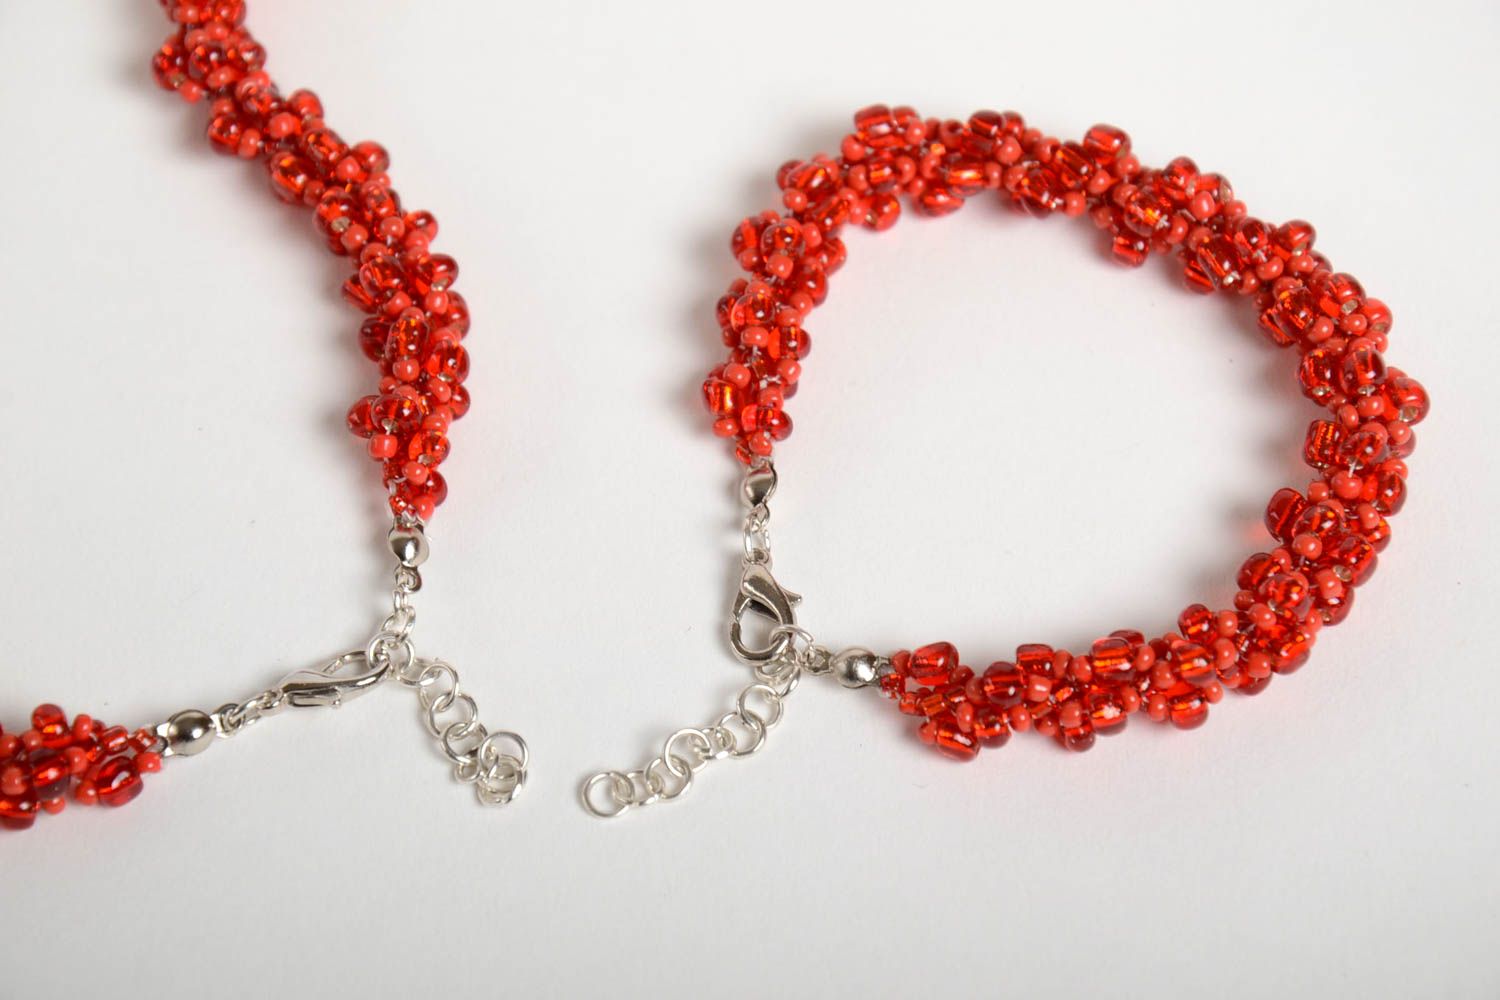 Handmade bracelet designer accessory gift ideas jewelry set of 2 items photo 3